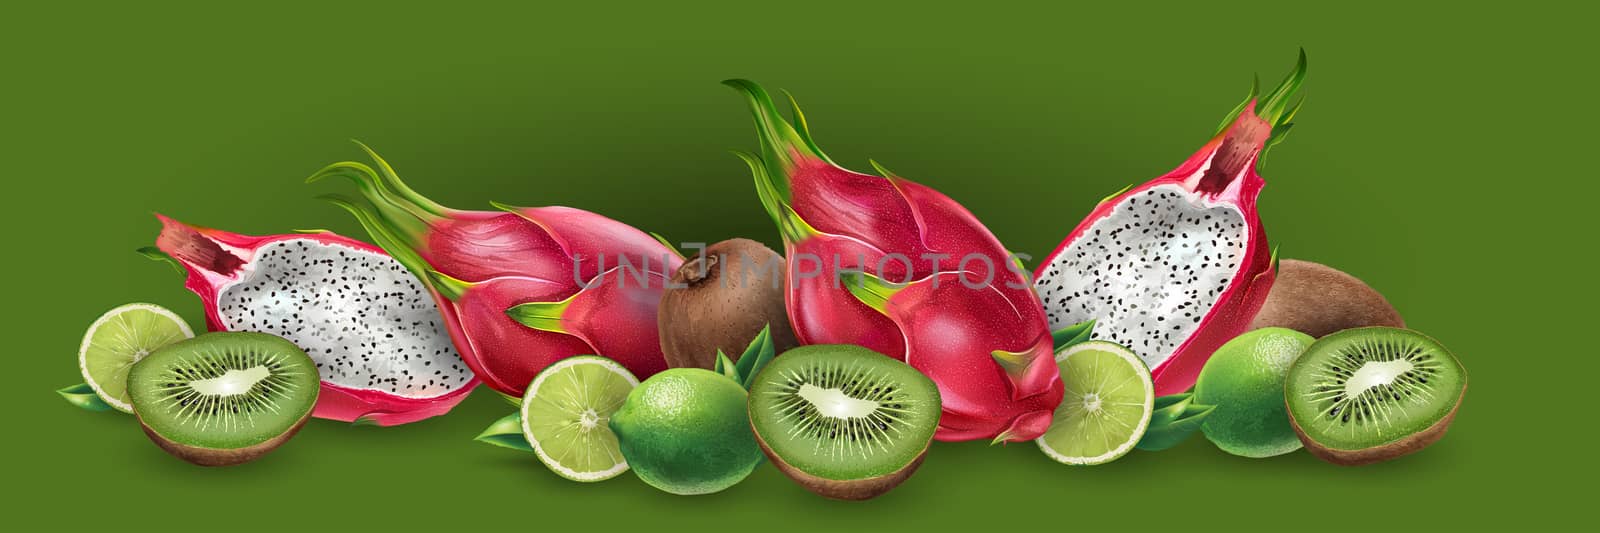 Dragon fruit and kiwi on green background.